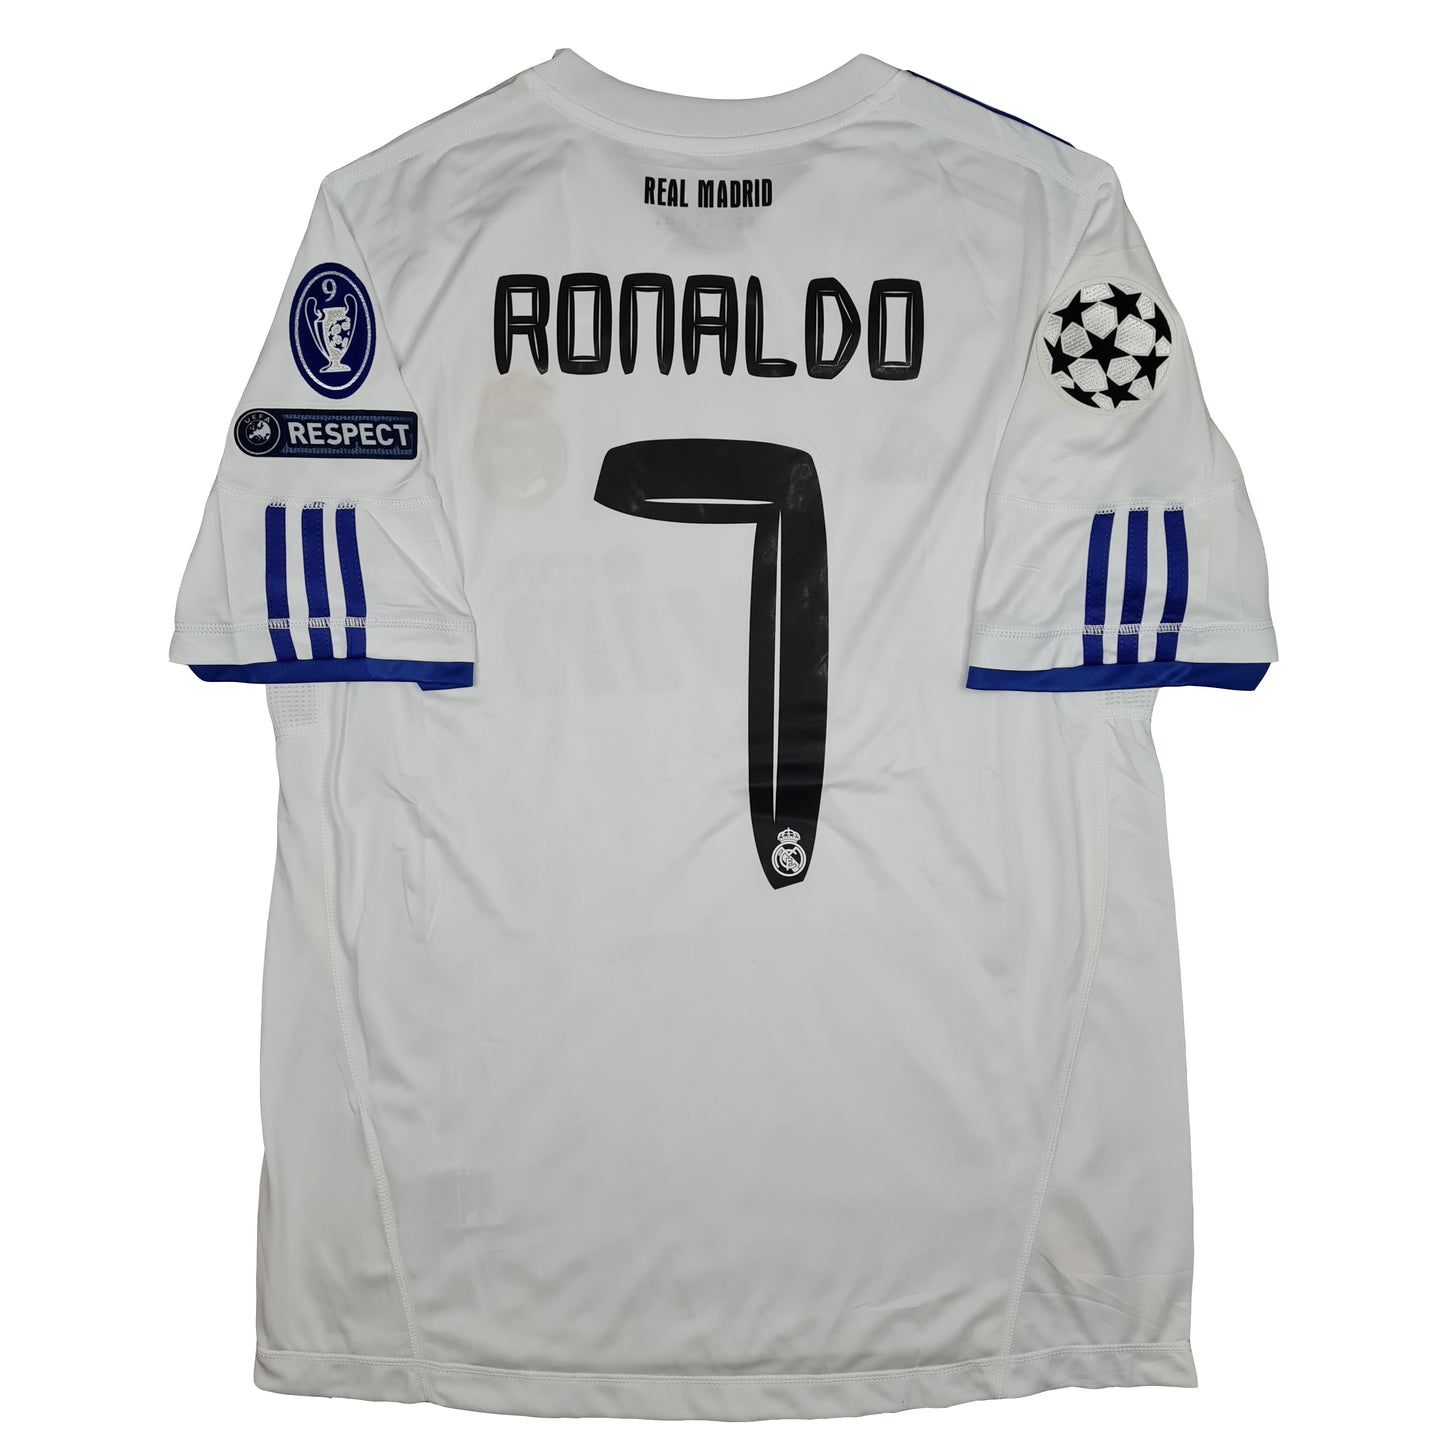 Real Madrid Titular 2010/11 - Ronaldo - Thunder Internacional